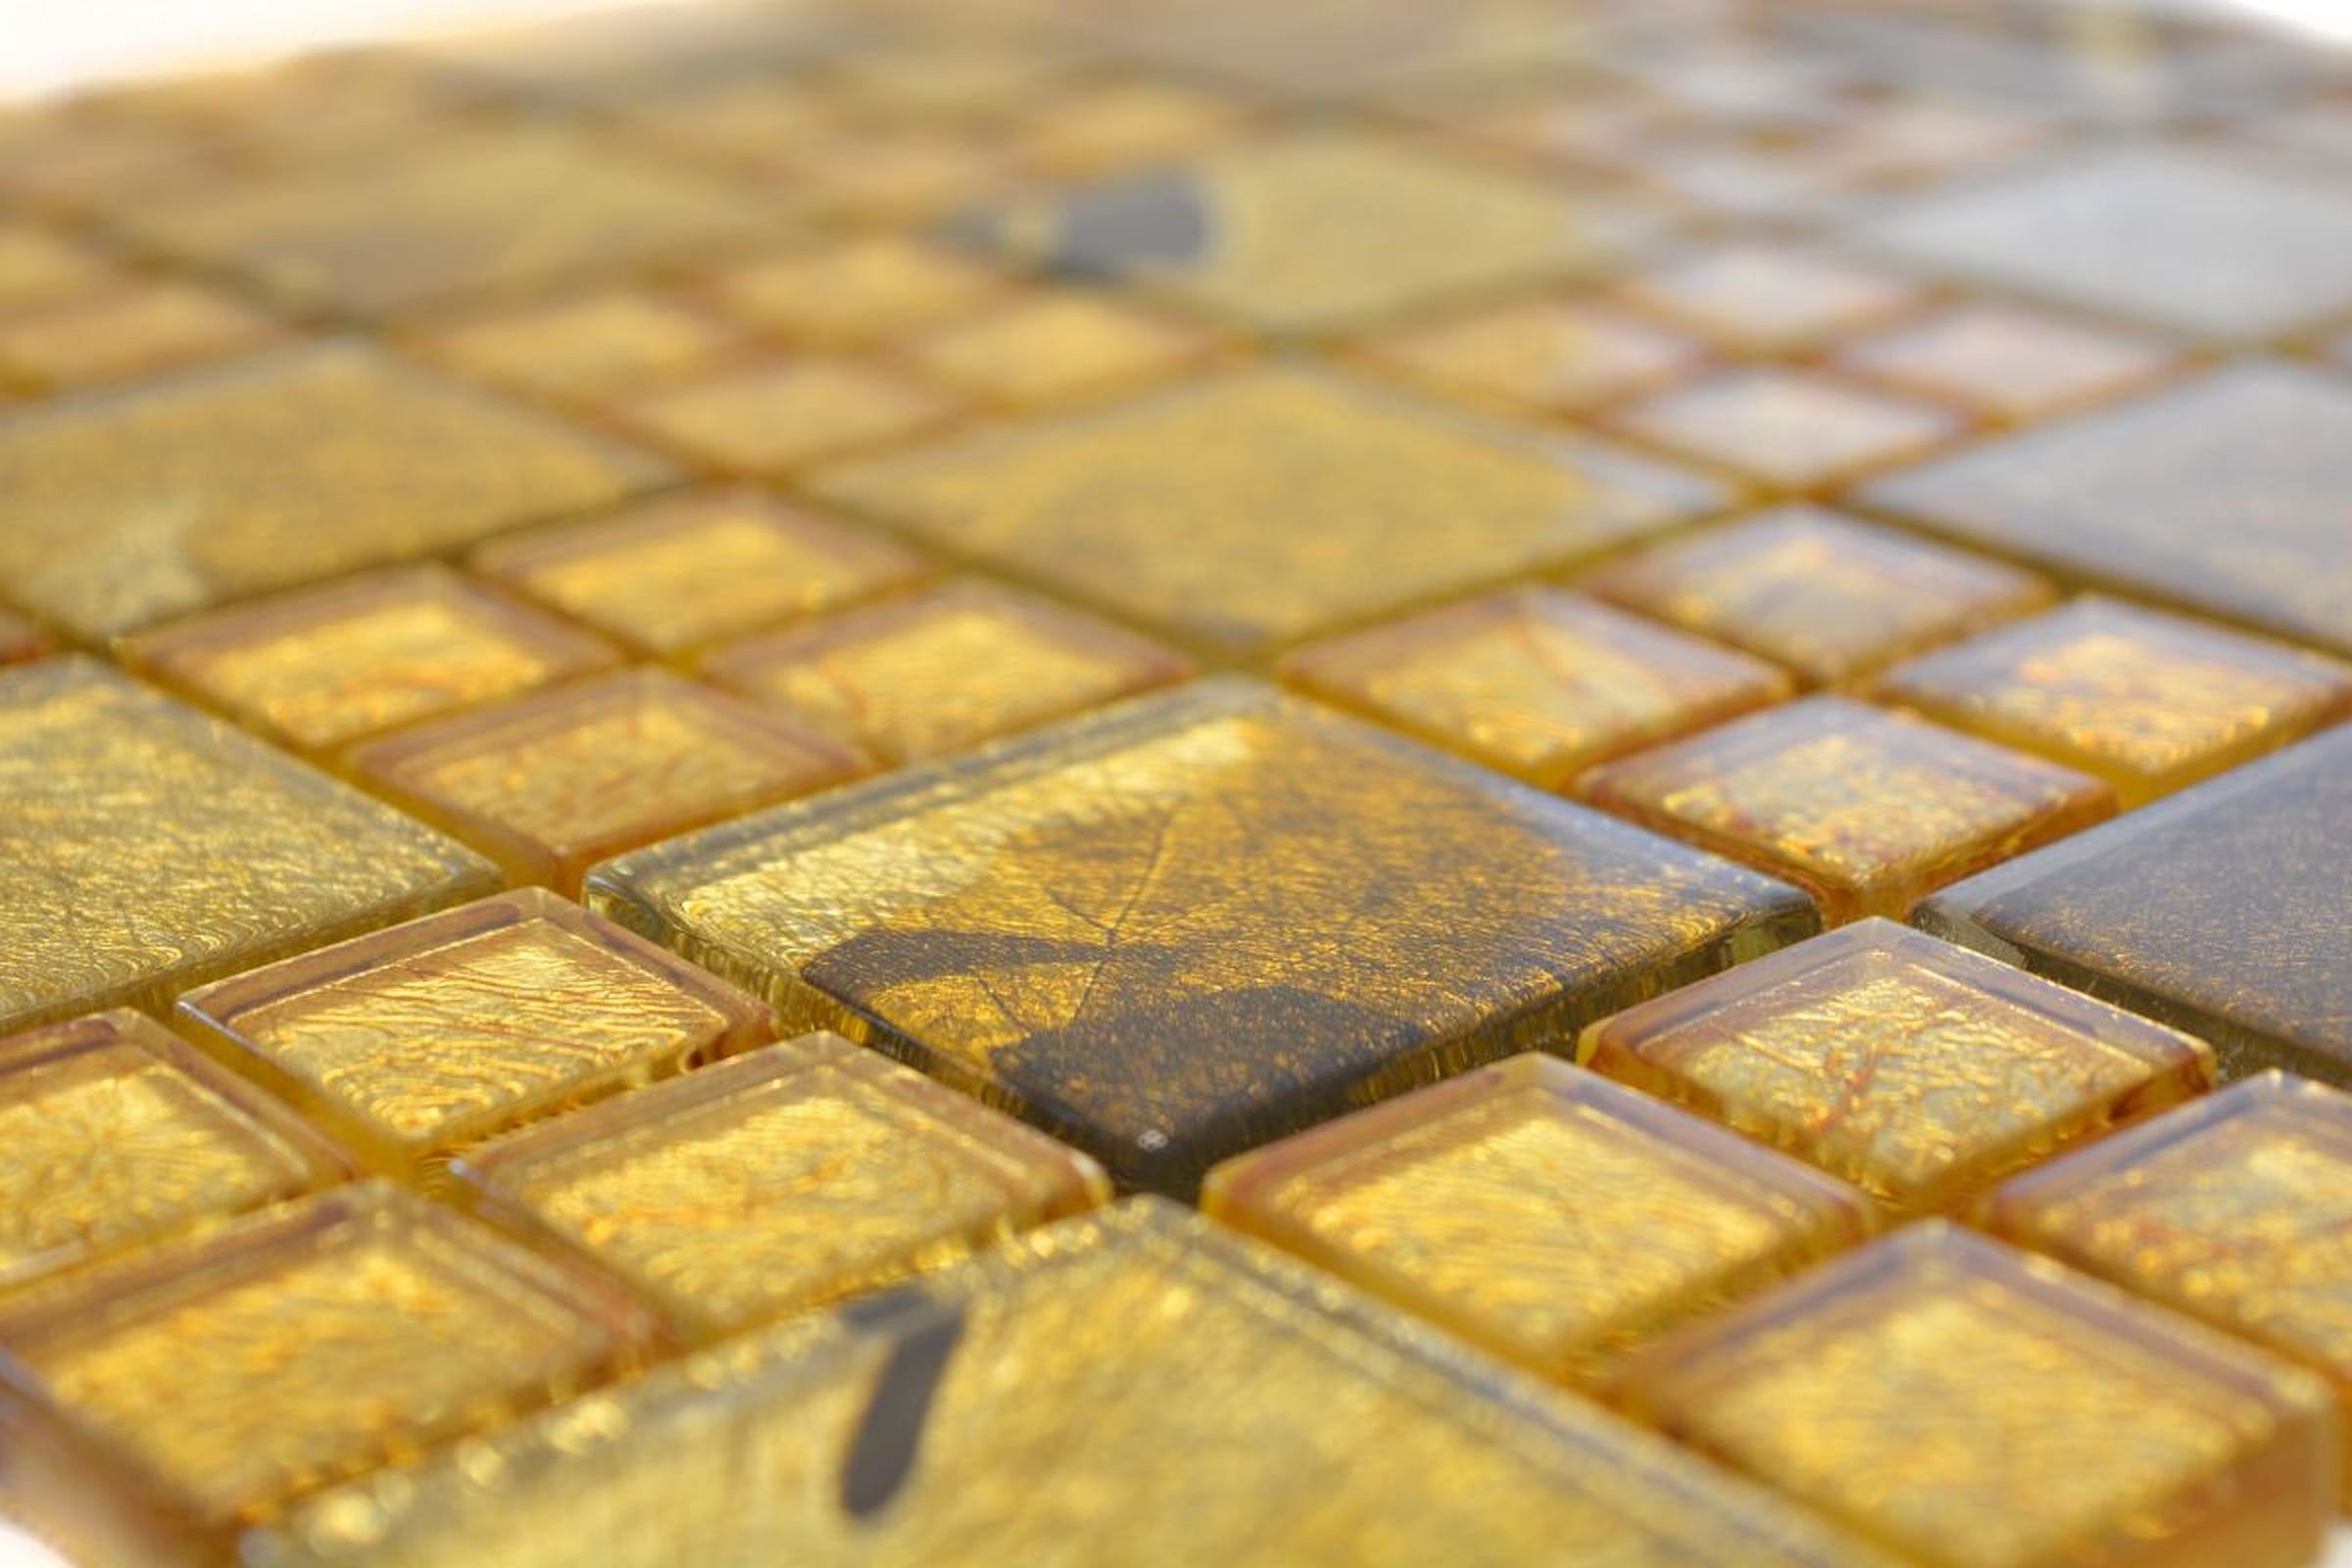 Mosaikfliese Fliesenspiegel Küche Mosaikfliesen Desert gold Mosani Duschwand Glasmosaik